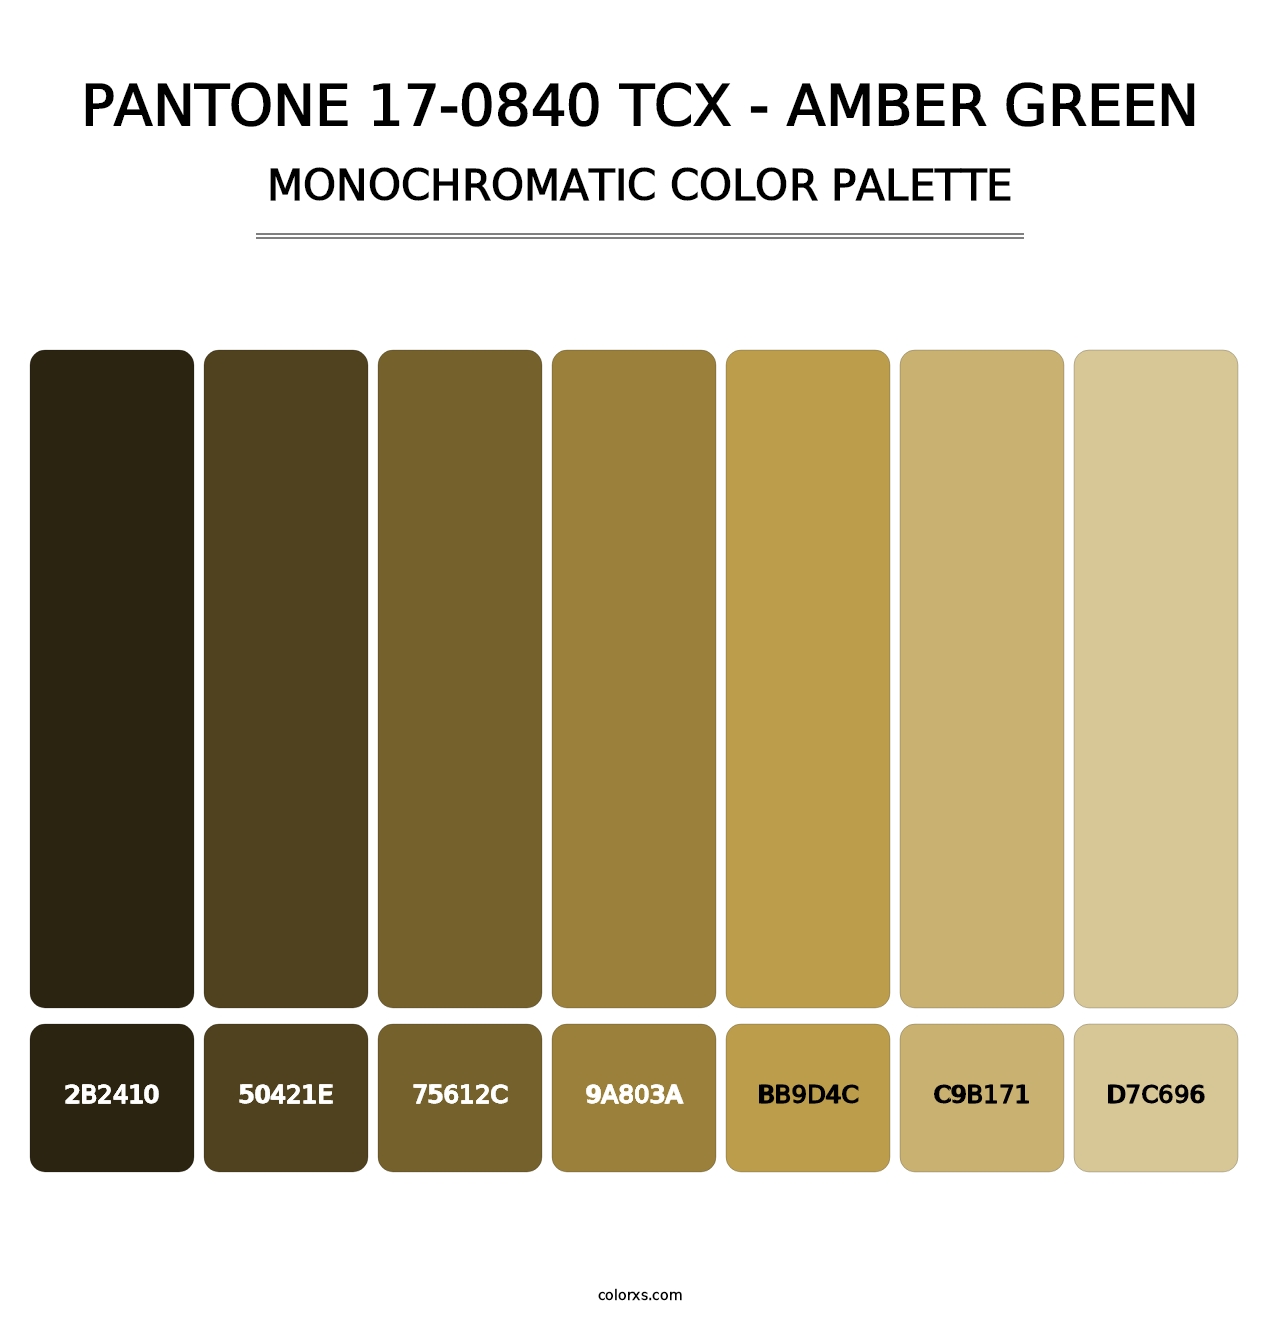 PANTONE 17-0840 TCX - Amber Green - Monochromatic Color Palette